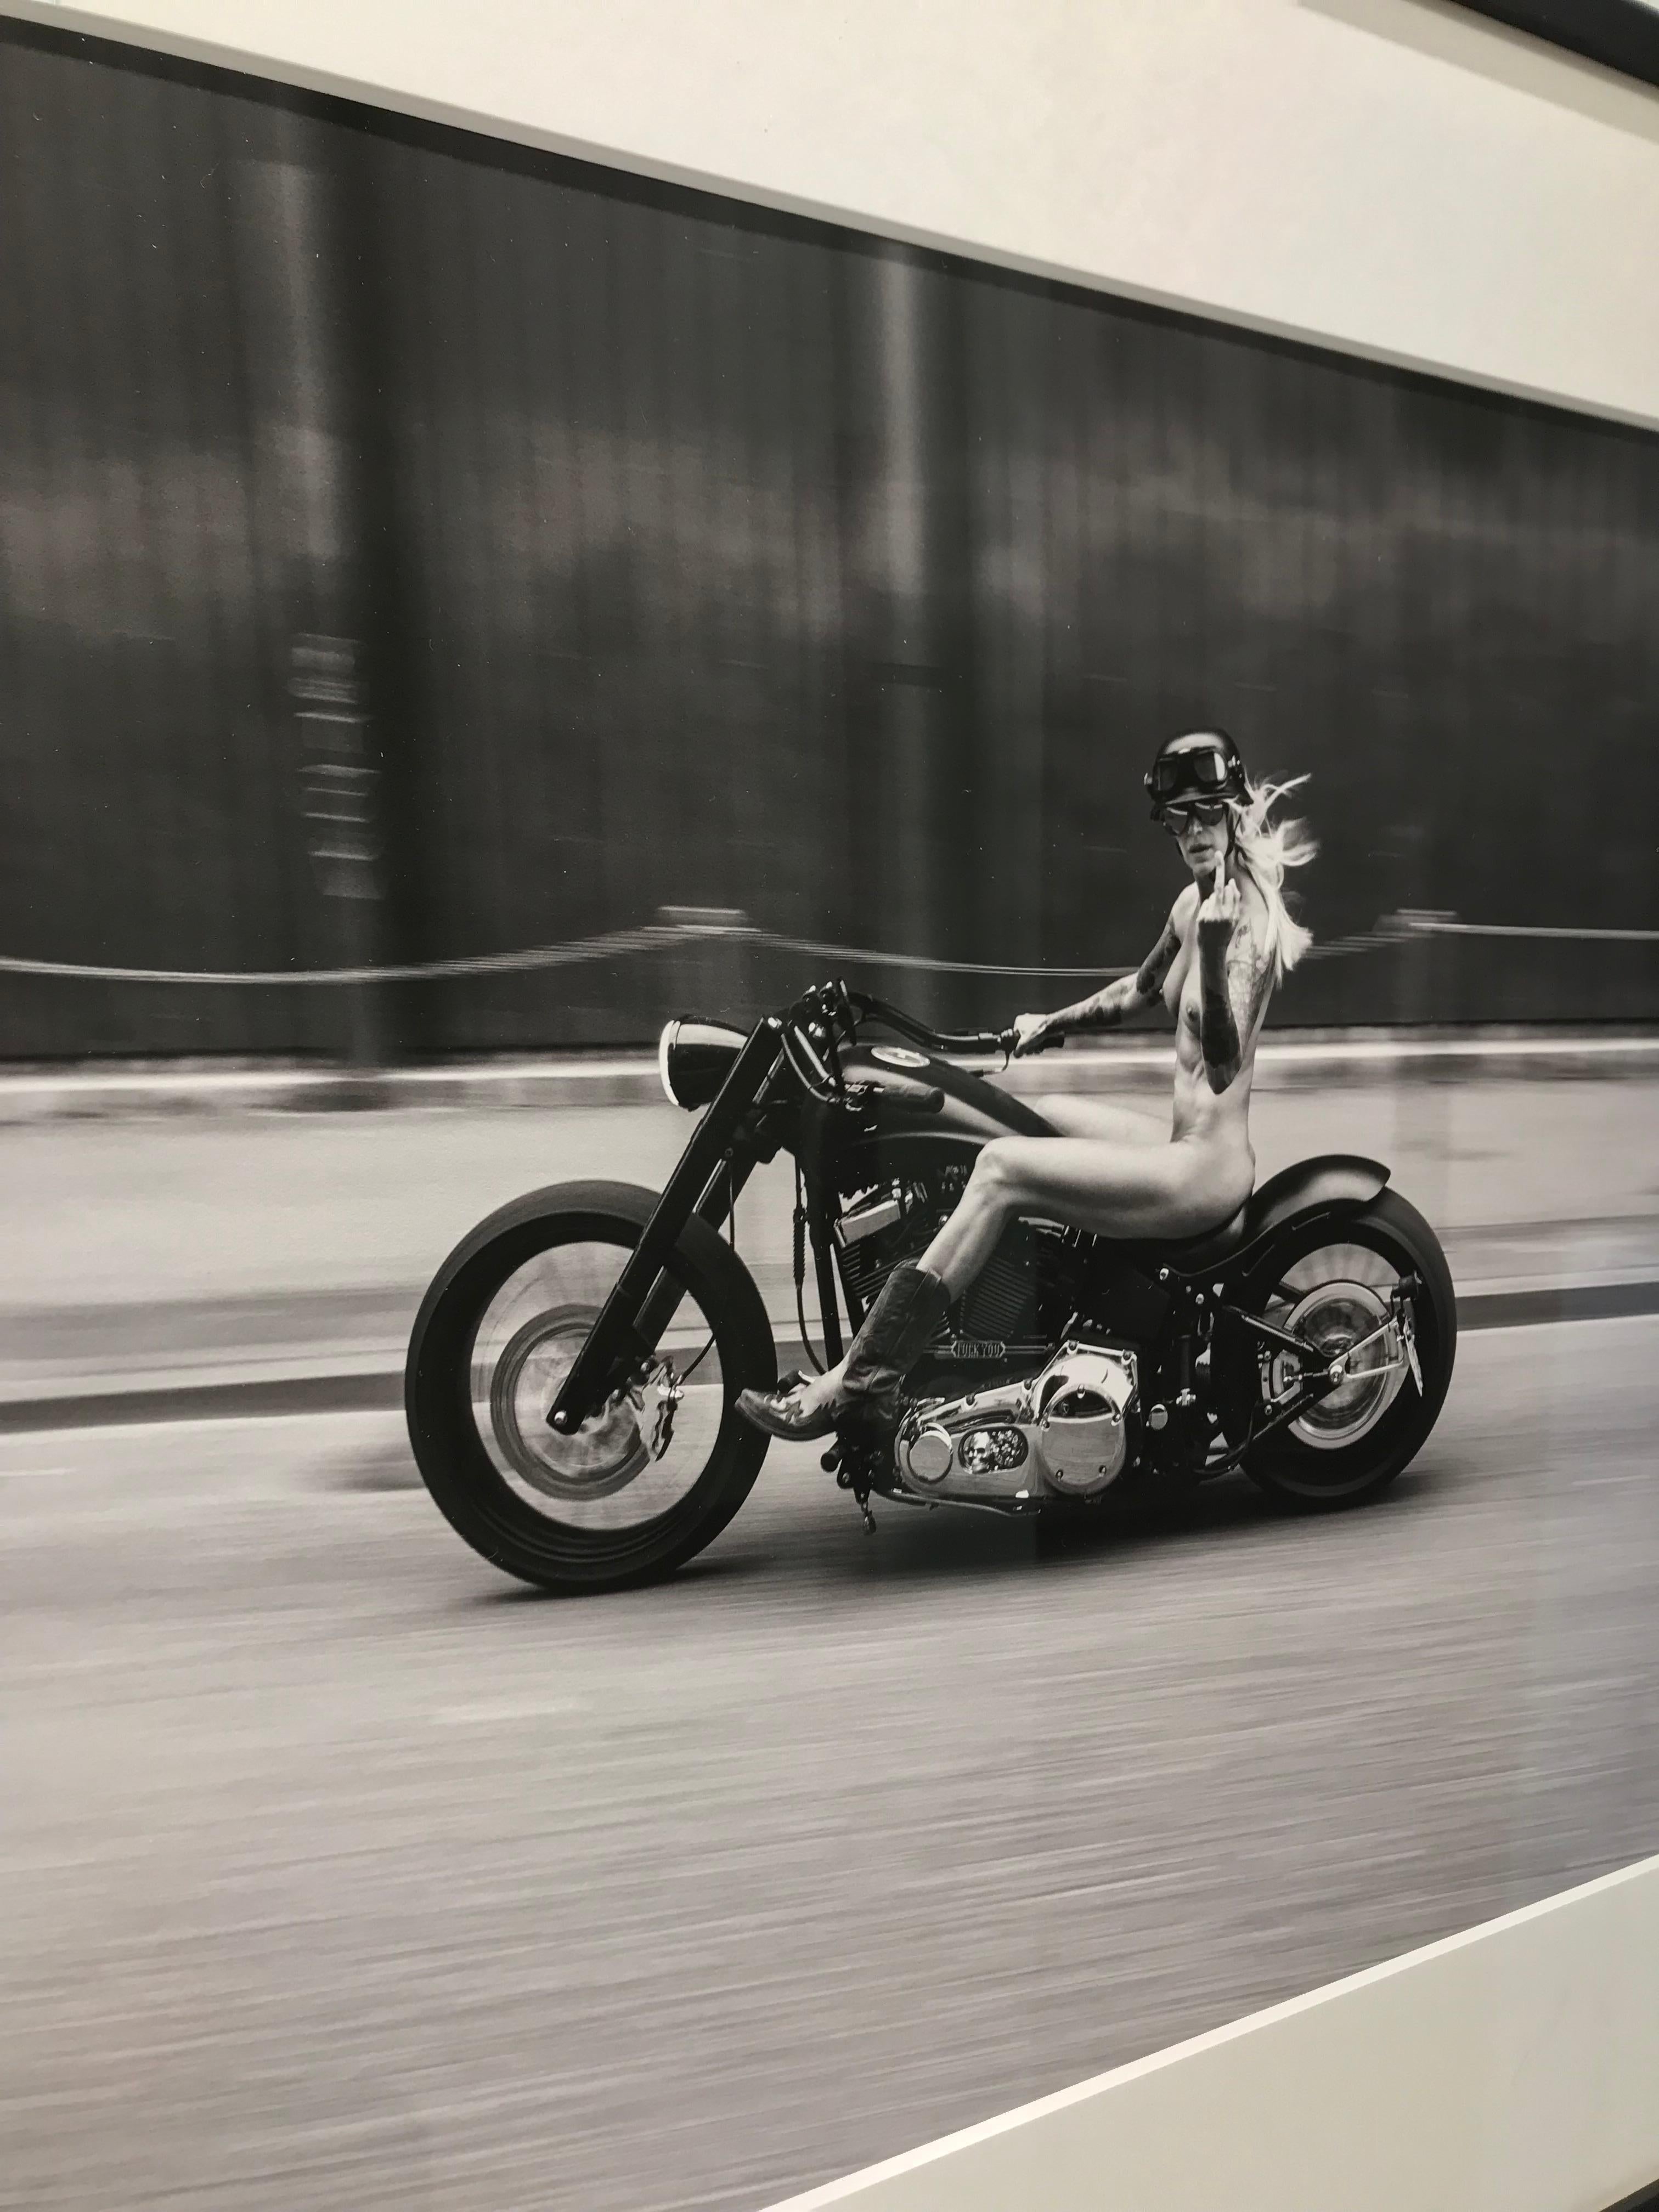 Right attitude, 2015, Contemporary Black and White photography, Harley Davidson - Photograph by Alberto Venzago